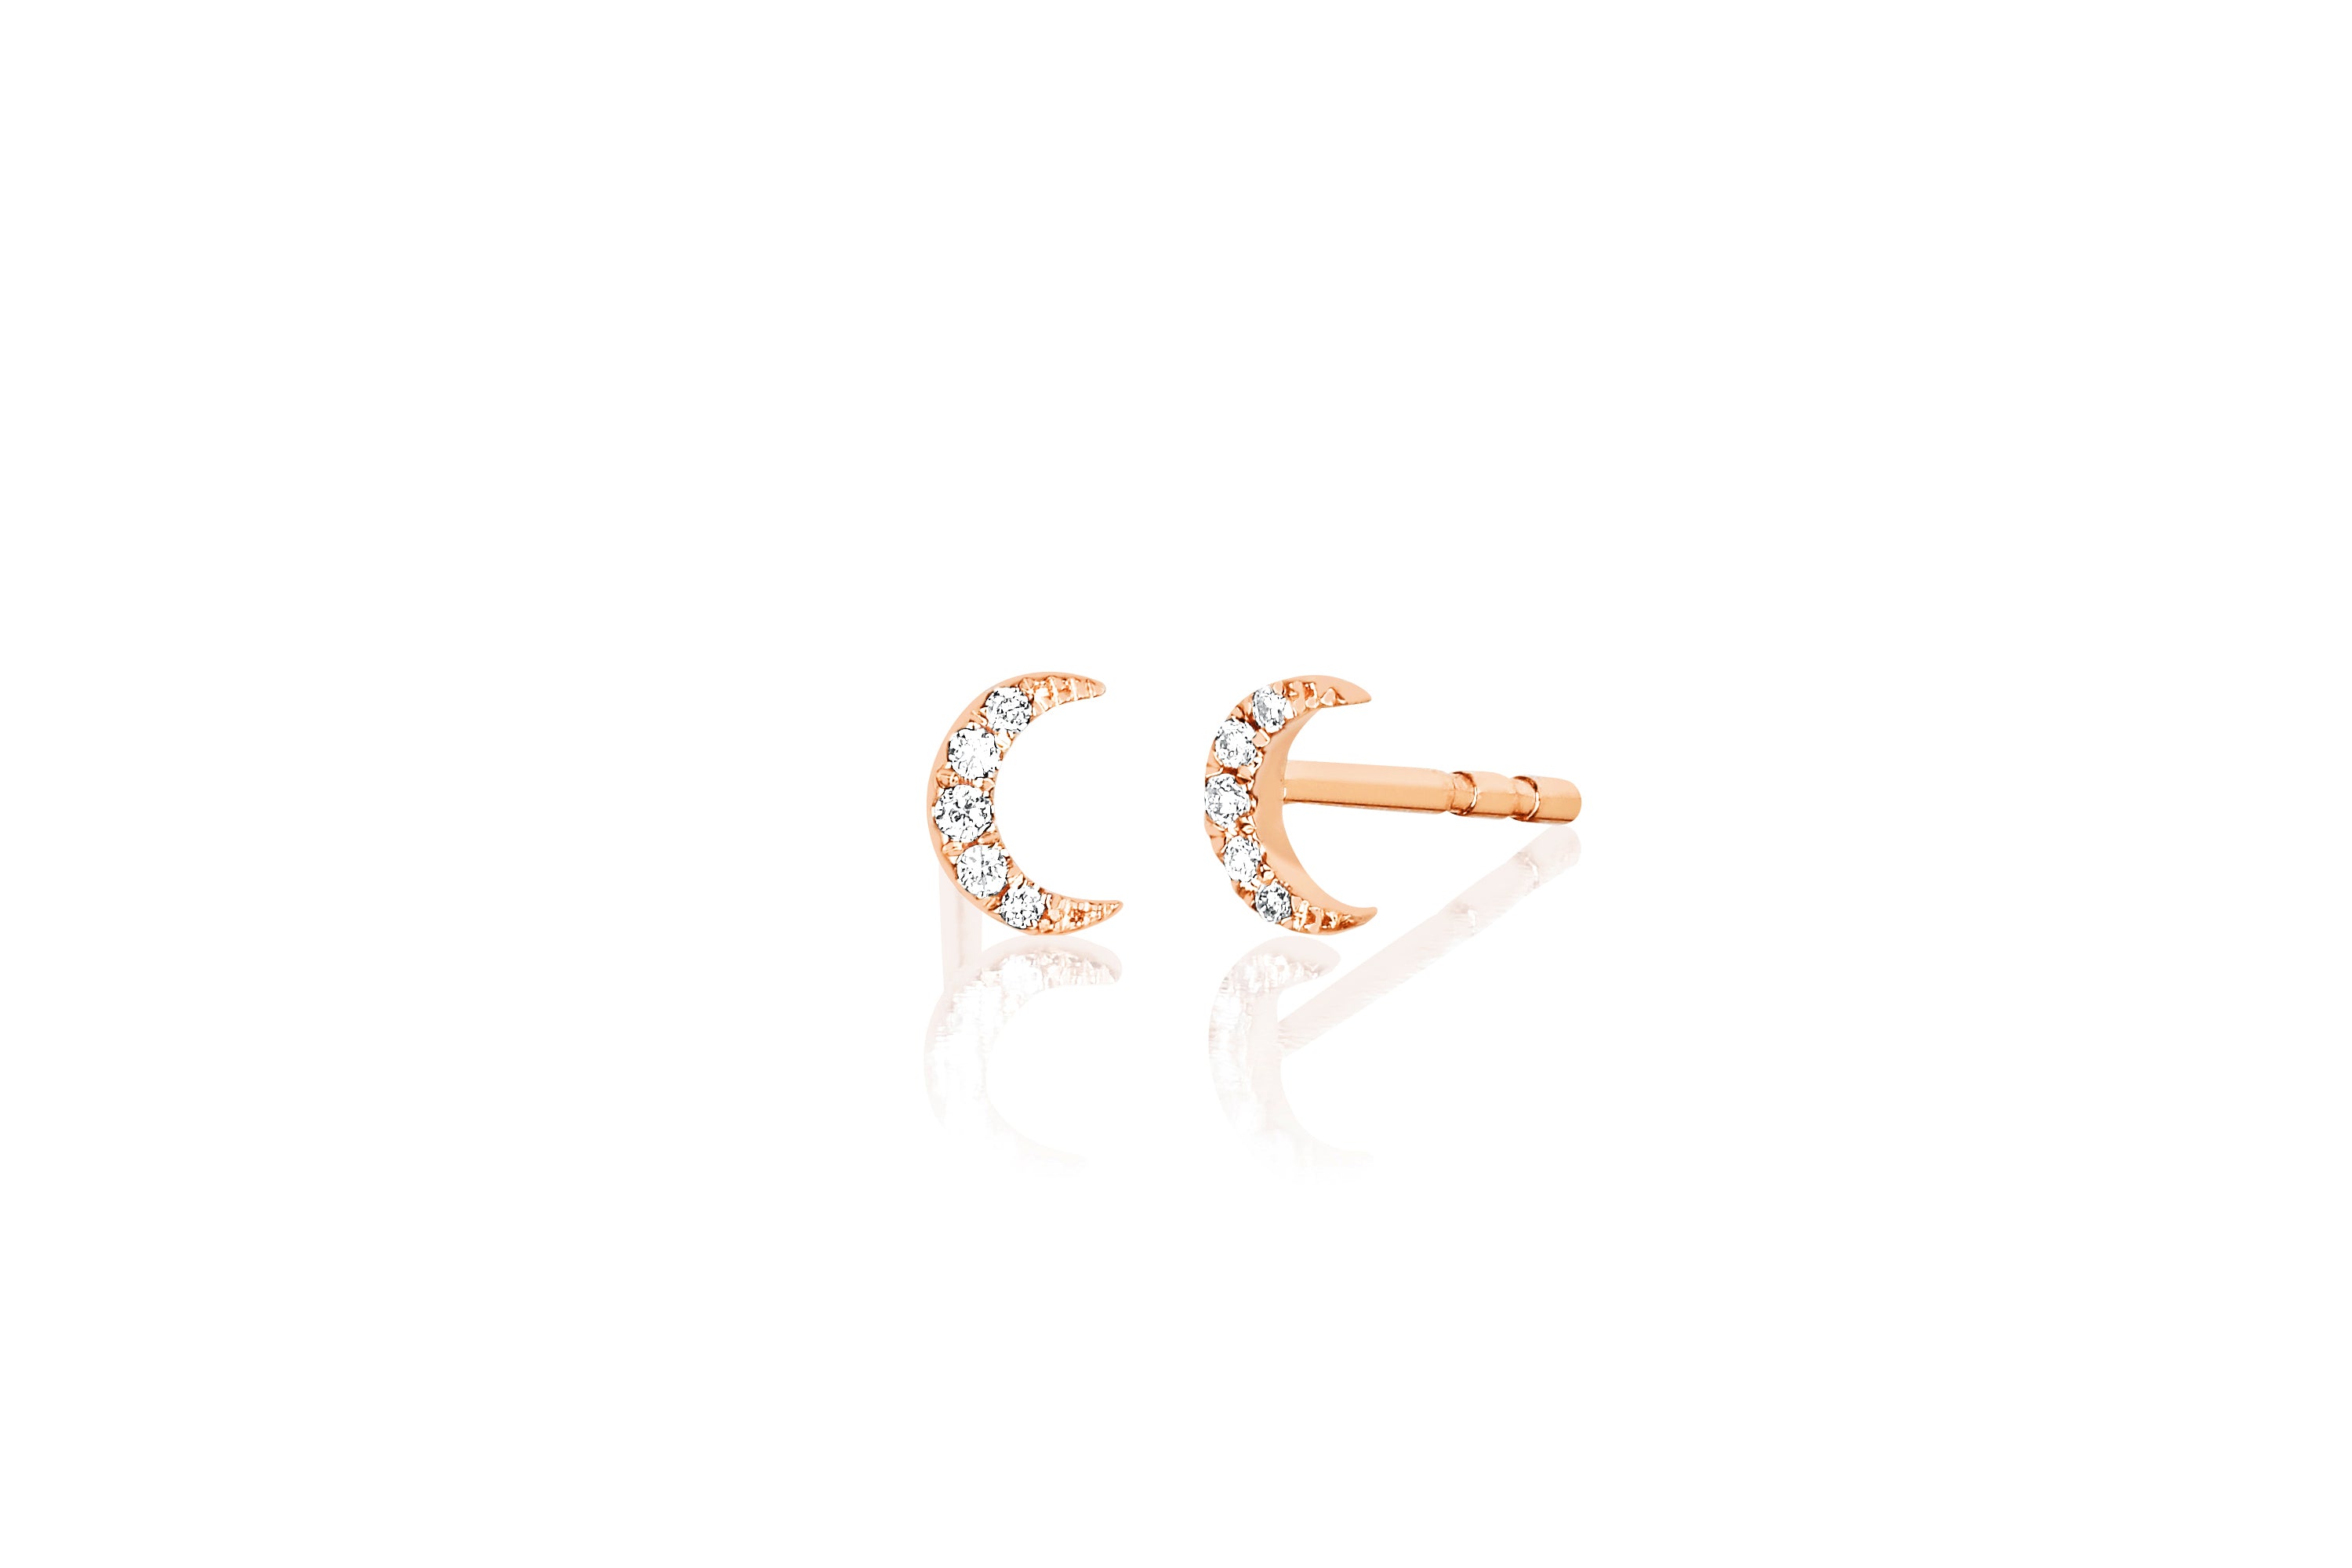 14k (karat) rose gold miniature stud earrings with crescent moon shape encrusted in diamonds